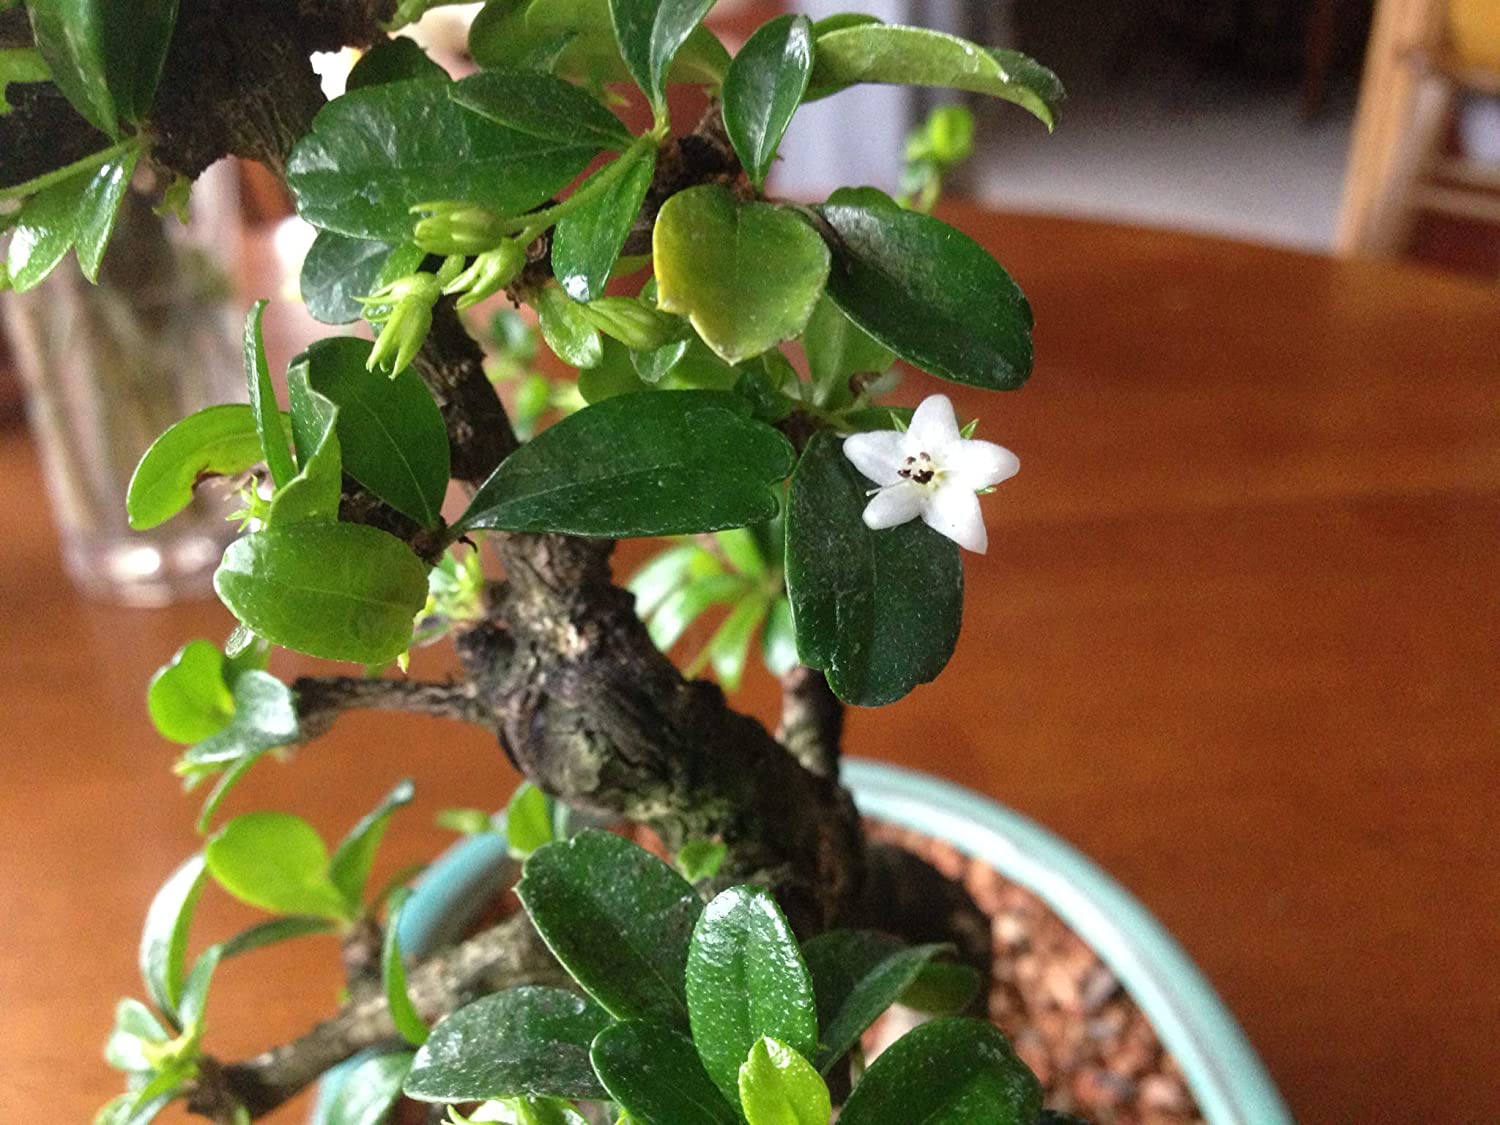 Bonsai suitable Carmona Fukien Tea Tree with Pot (Live Plant)